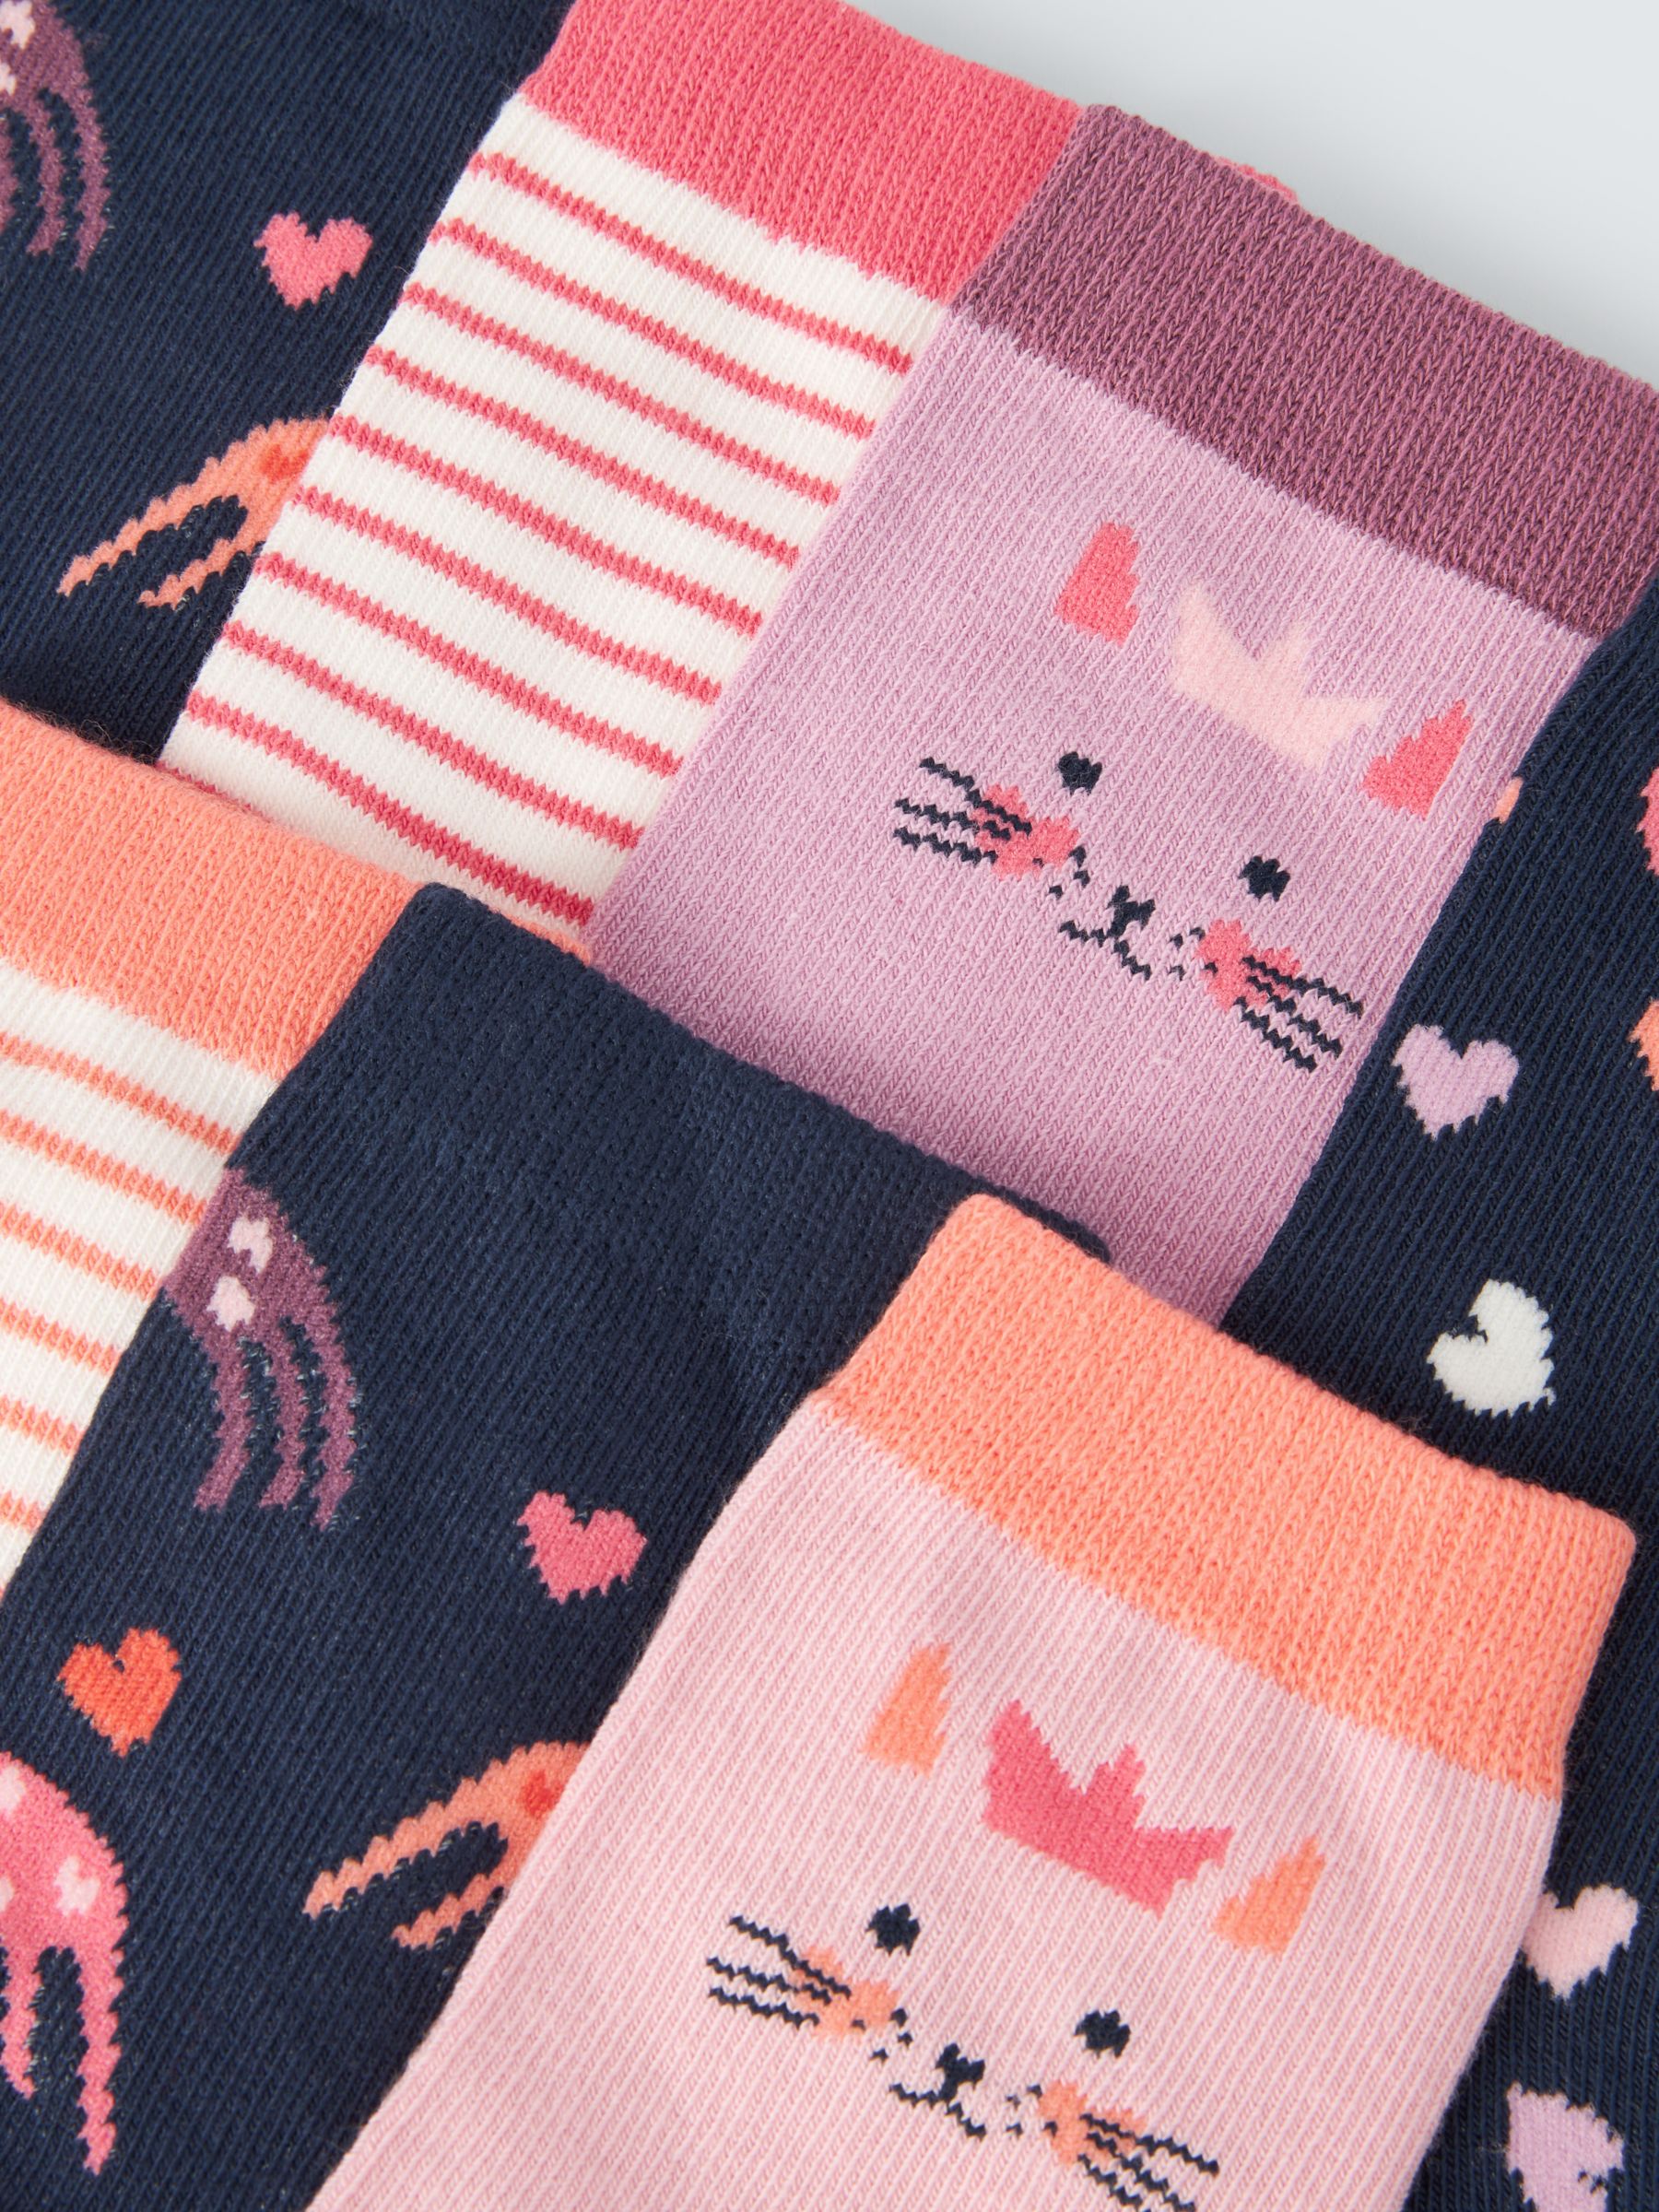 John Lewis Kids' Cotton Rich Party Cat Stripe Socks, Pack of 7, Multi, 12.5 Jnr-3.5